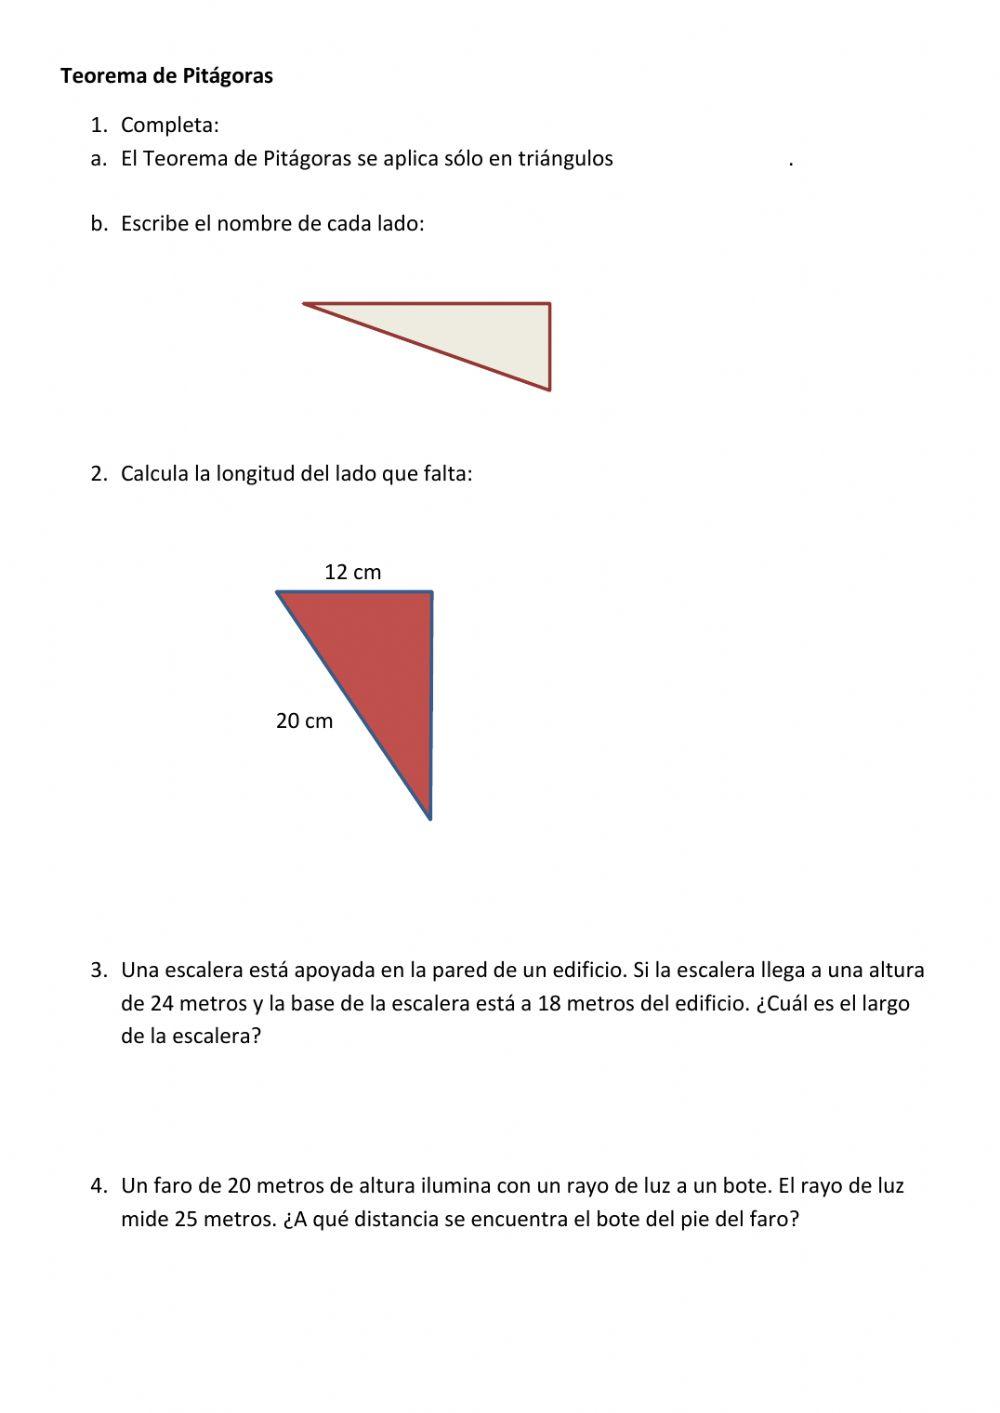 Teorema de Pitágoras activity for 2° año secundaria | Live Worksheets